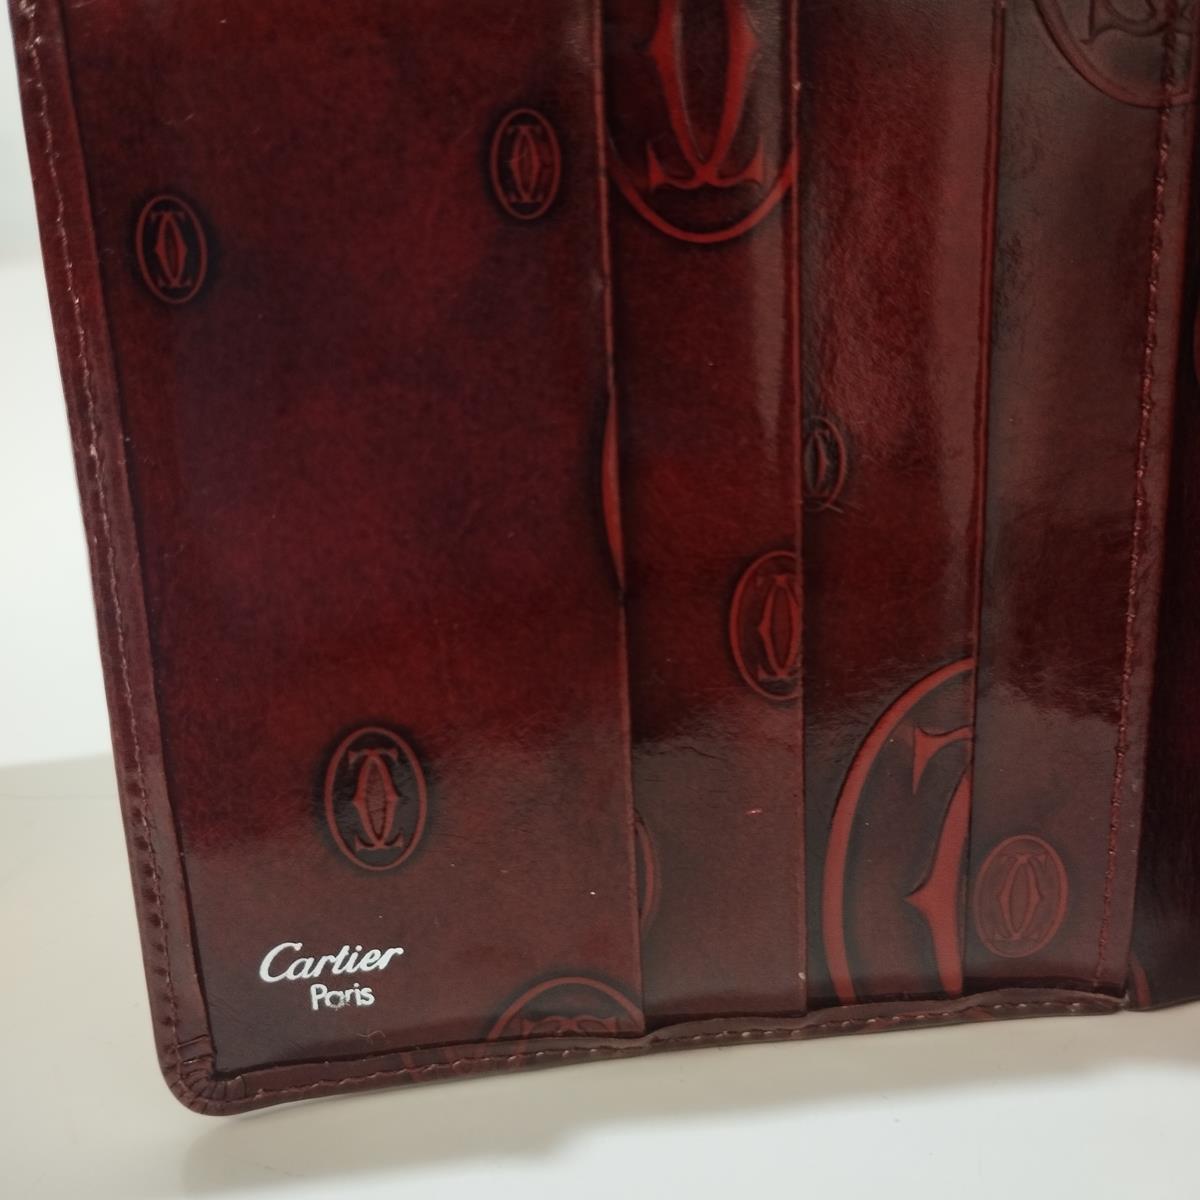 Cartier Leather Wallet In Fair Condition For Sale In Gazzaniga (BG), IT